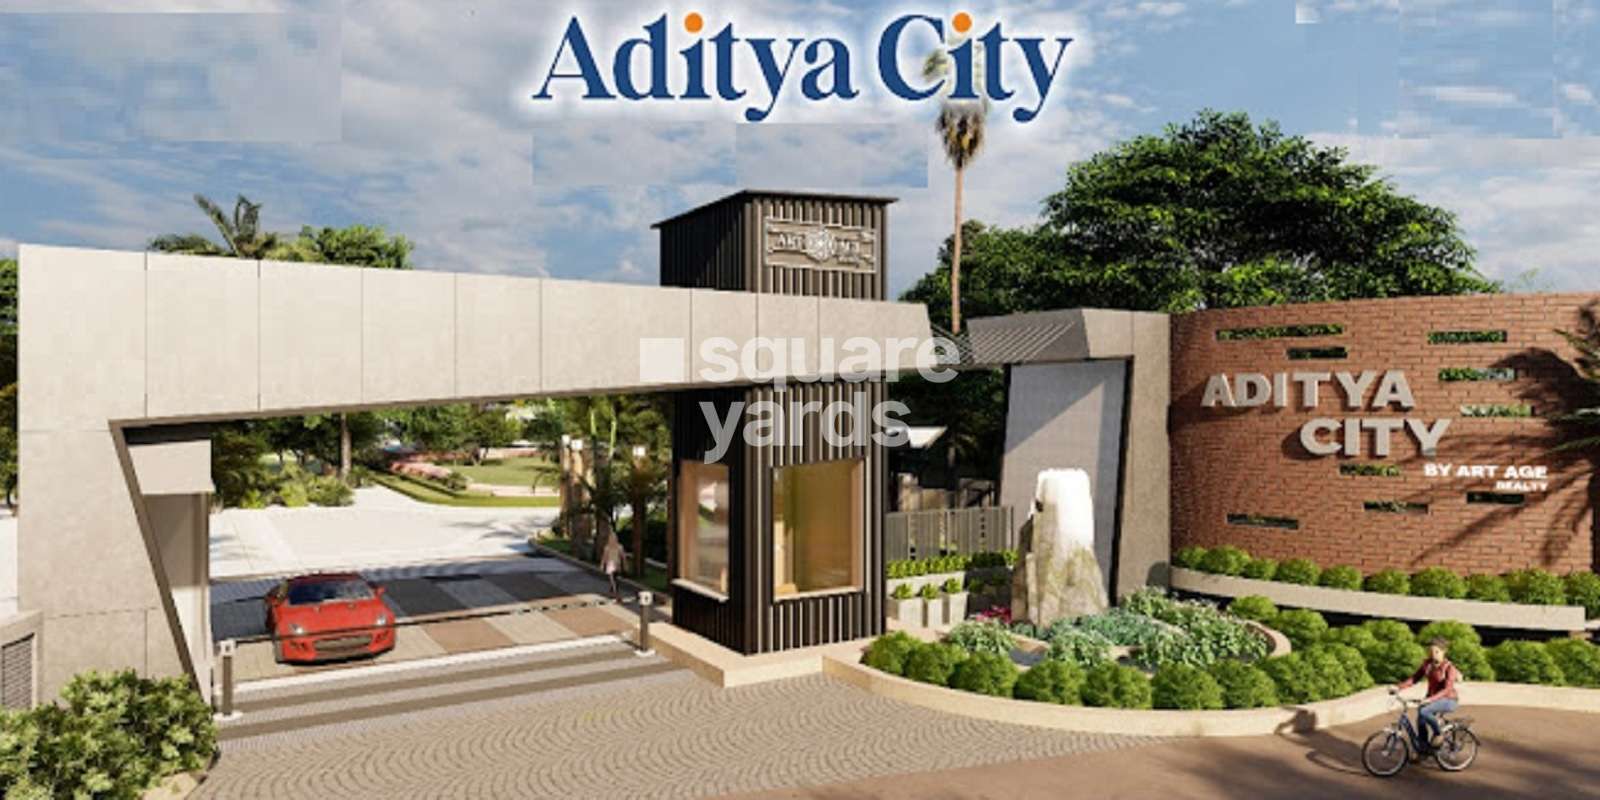 Art Aditya City Cover Image